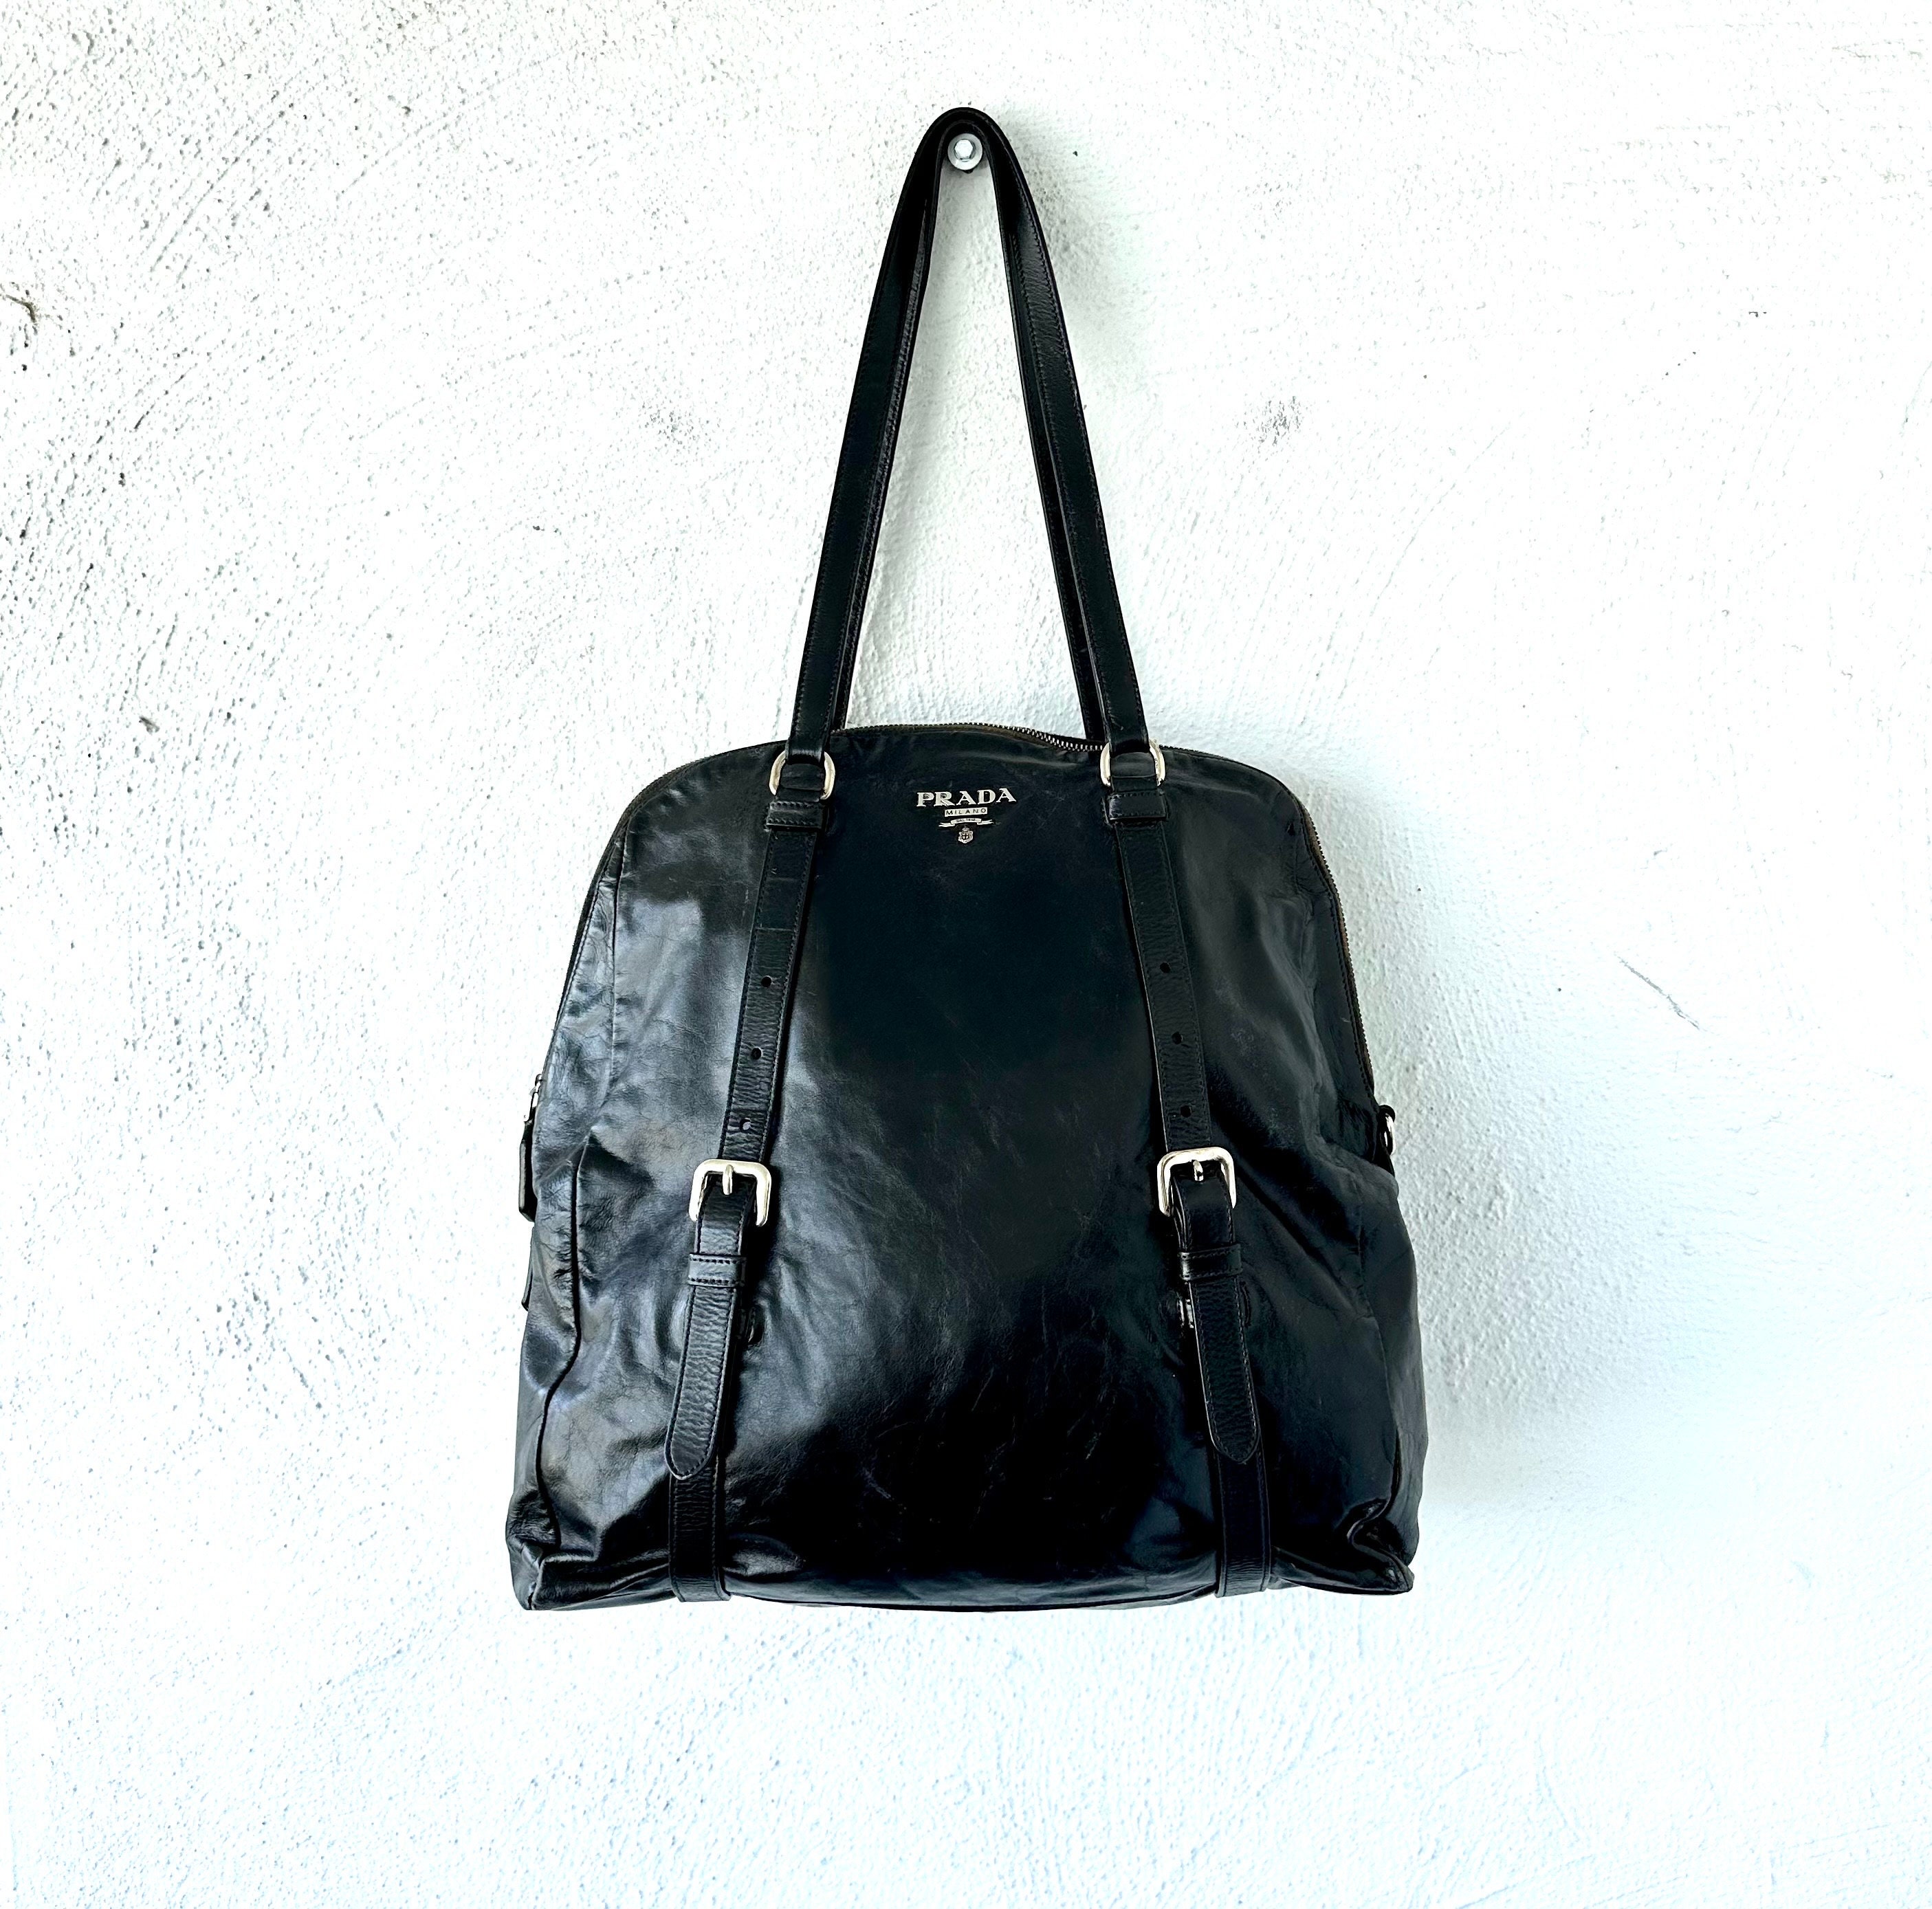 NICE WEAR - #PRADA Handbags Combo MRP-1299/- OFFER... | Facebook